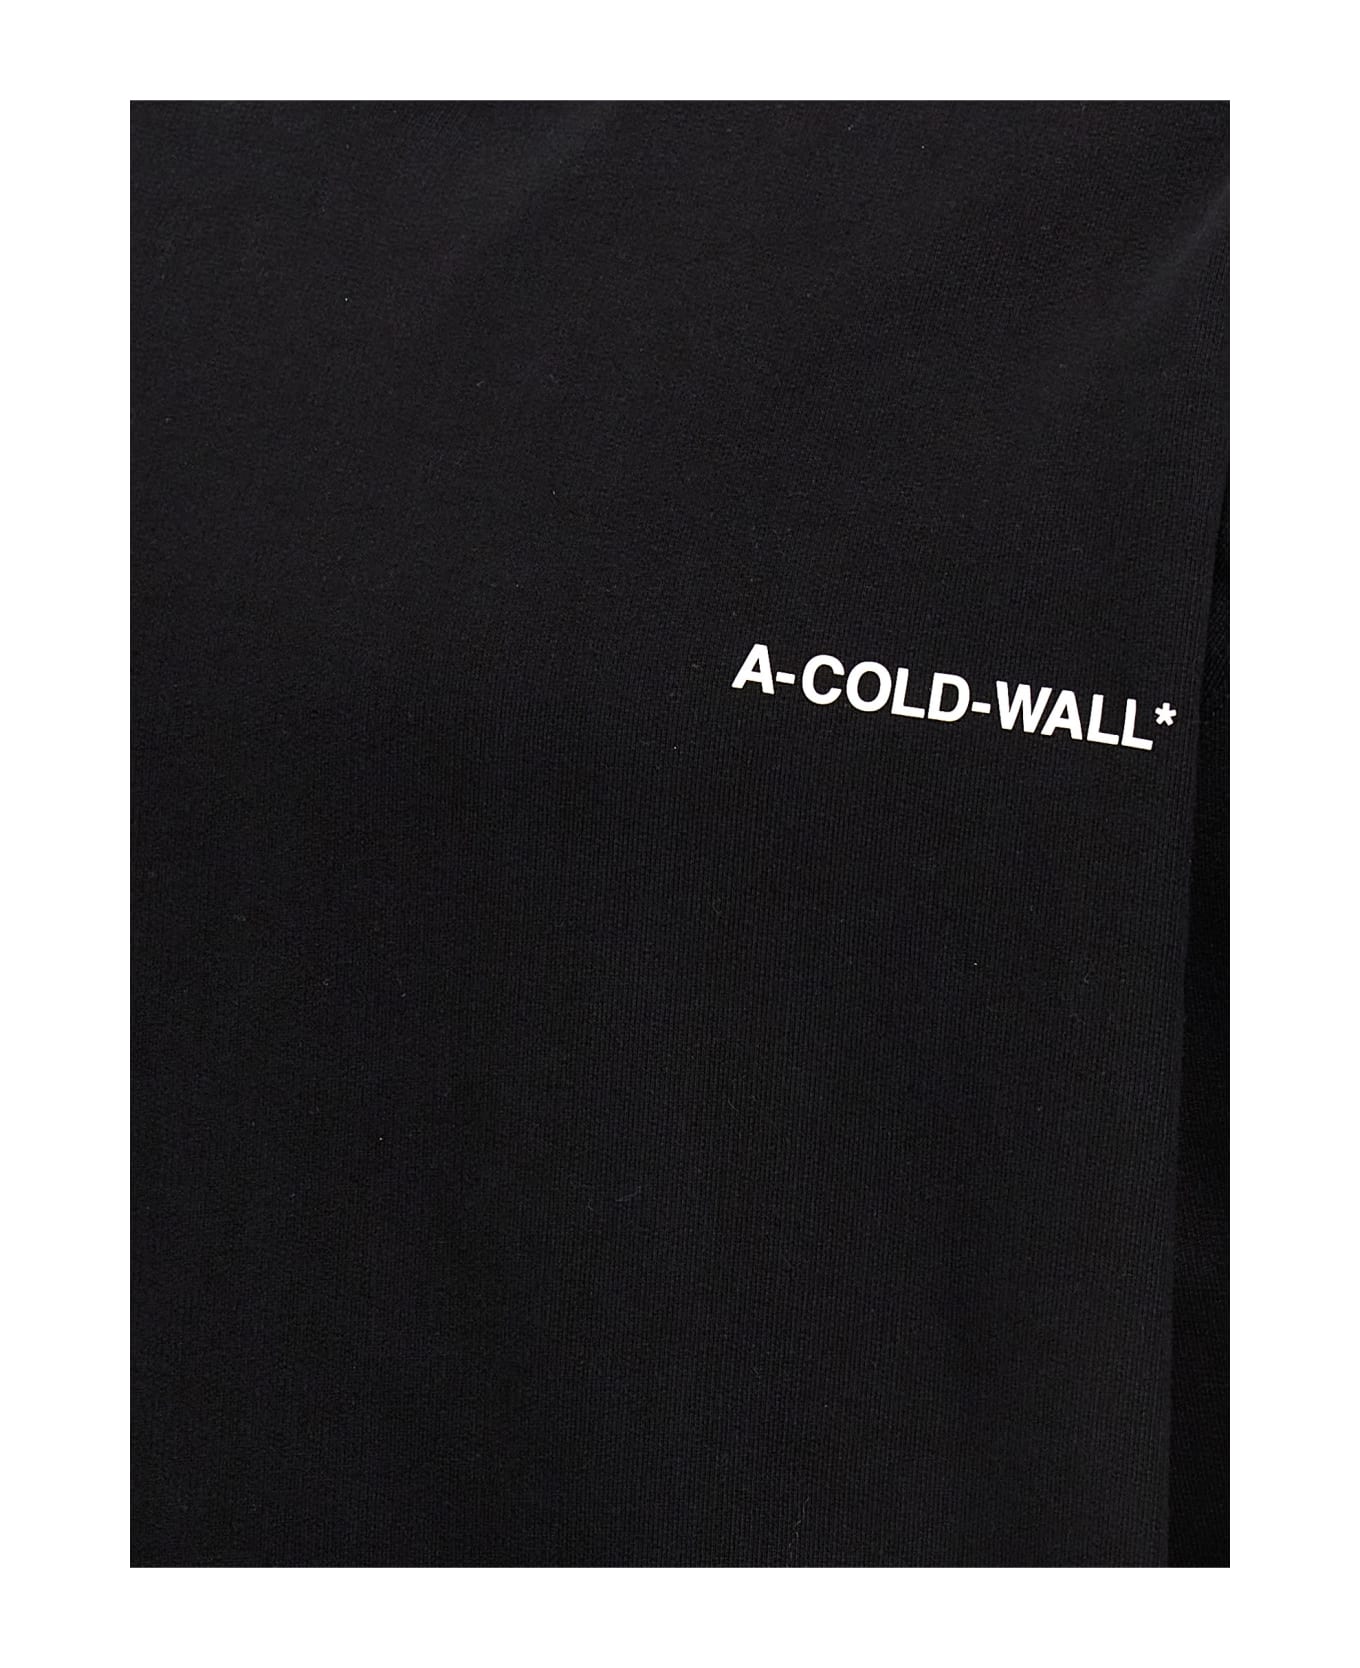 A-COLD-WALL 'essential Small Logo' Hoodie - Black   フリース